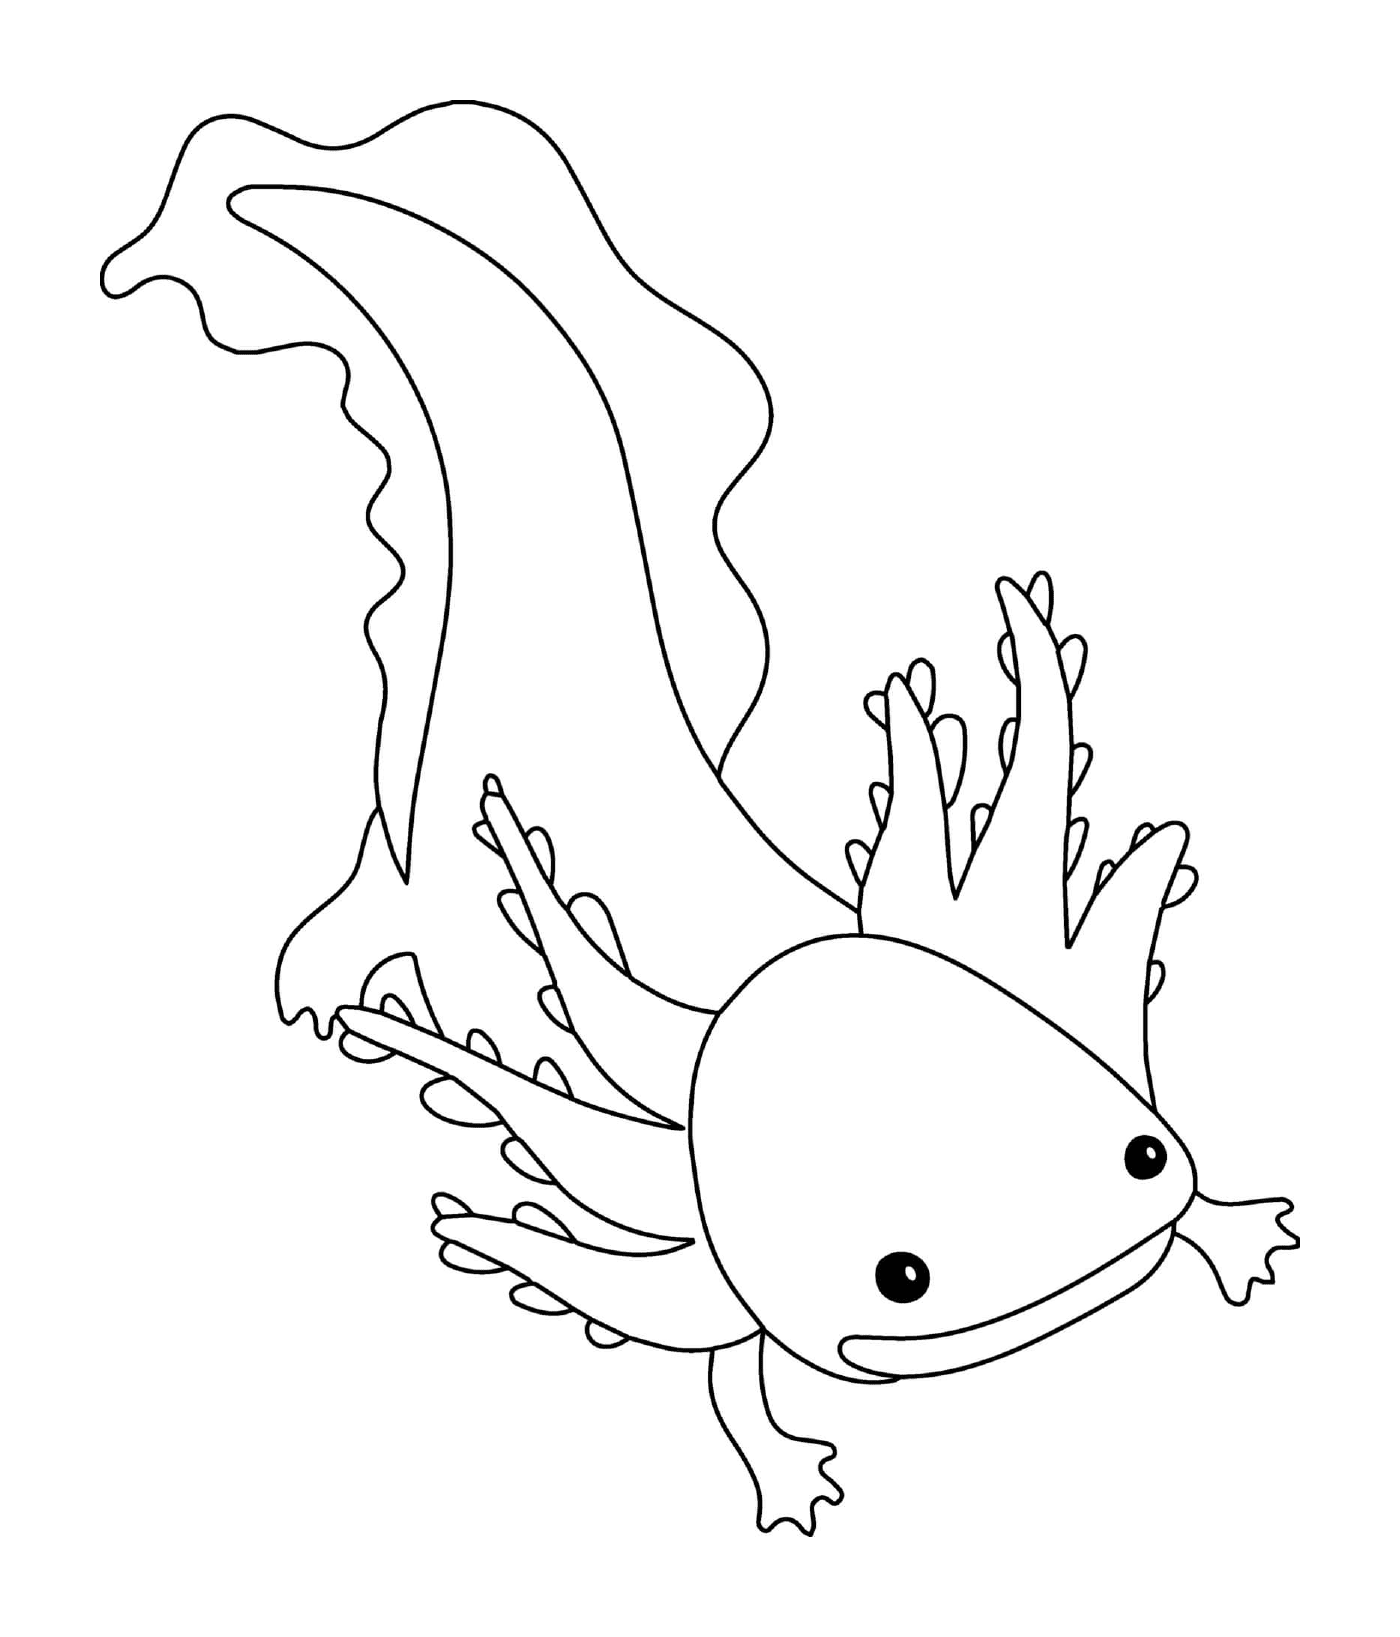  Axolotl 永远不会改变 